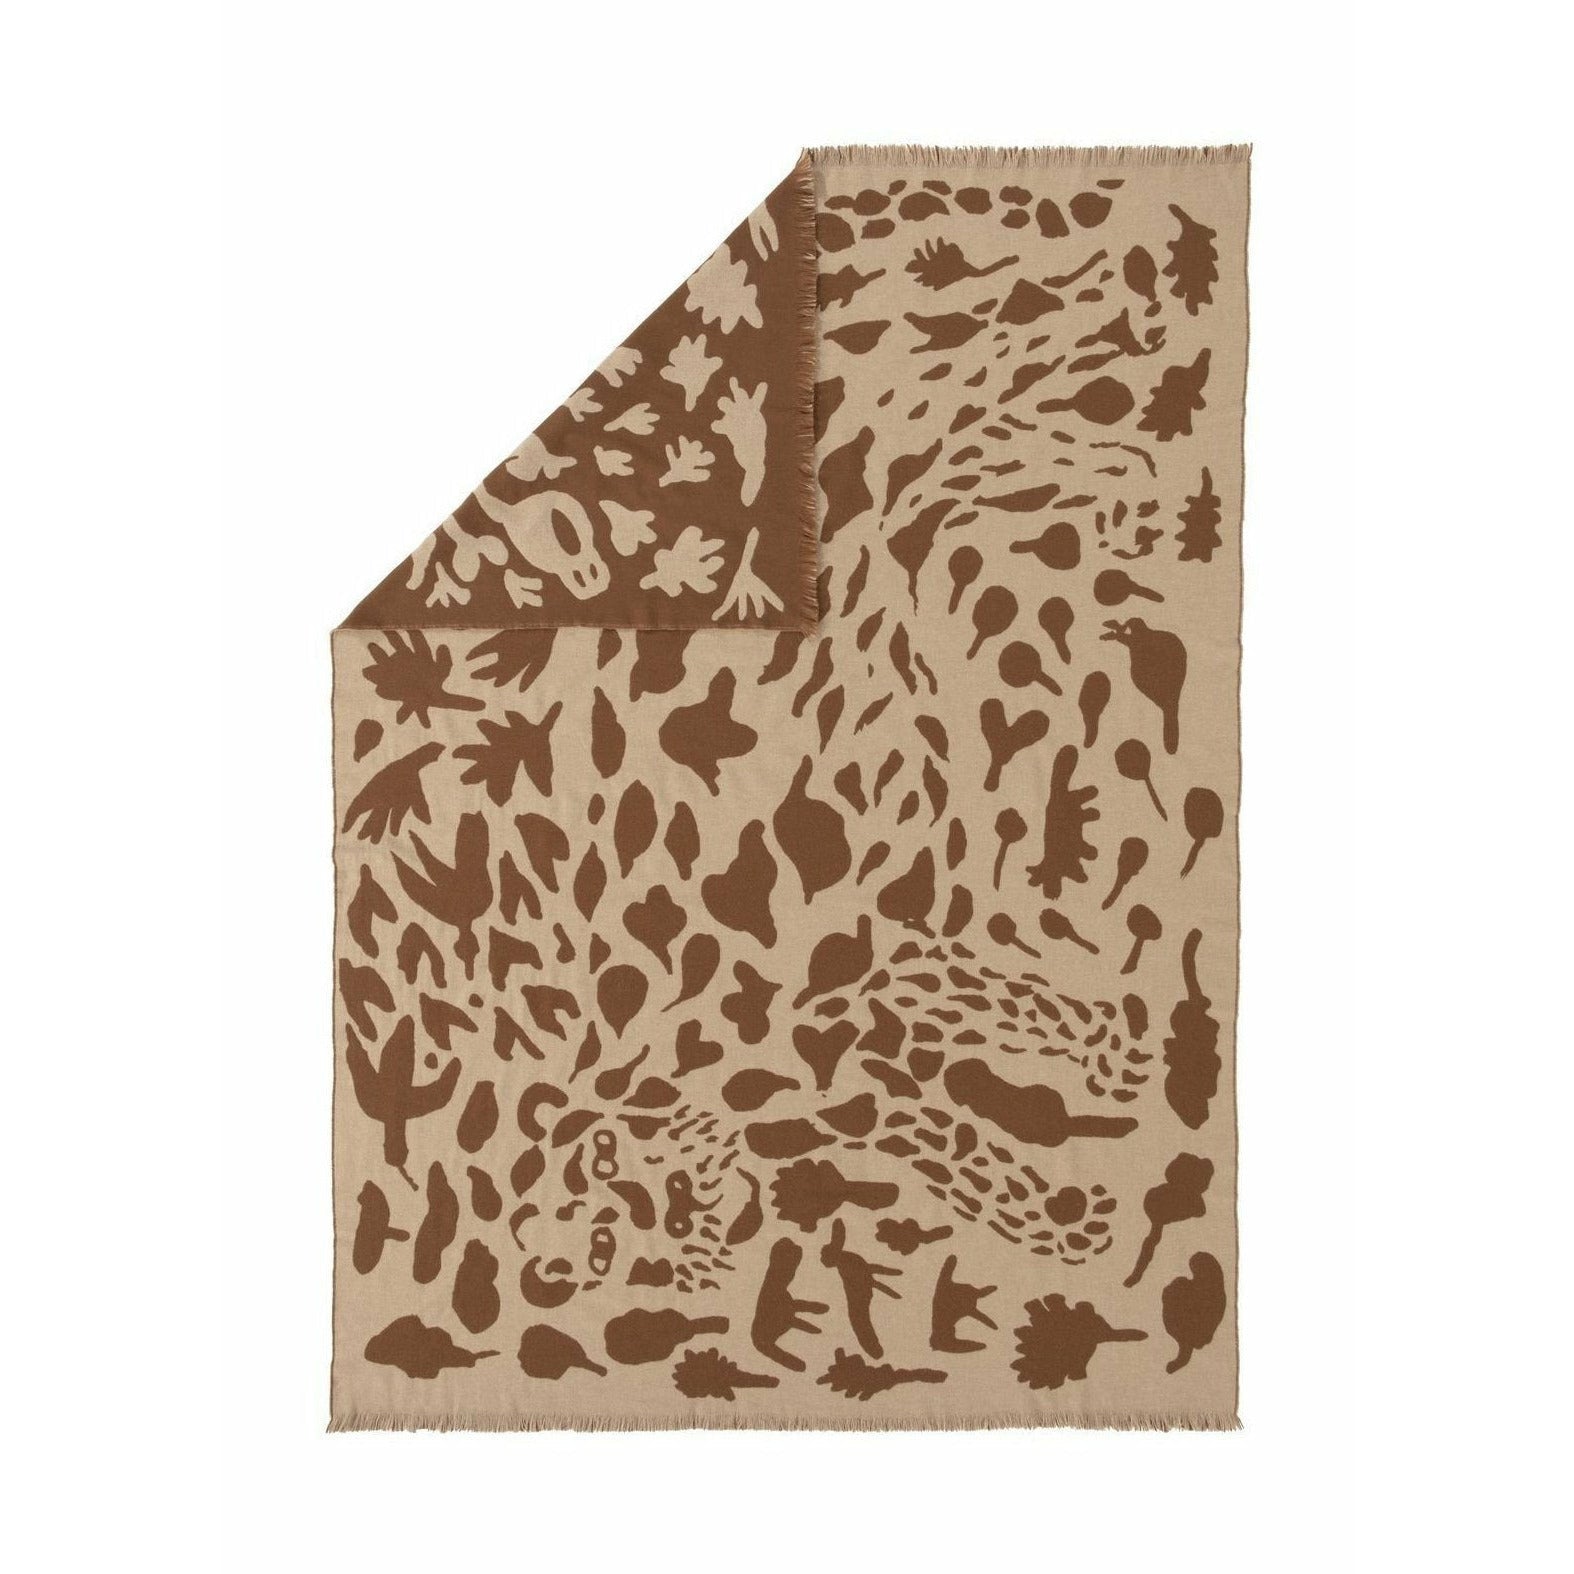 Iittala oiva toikka koc gepardowy, 180x130 cm